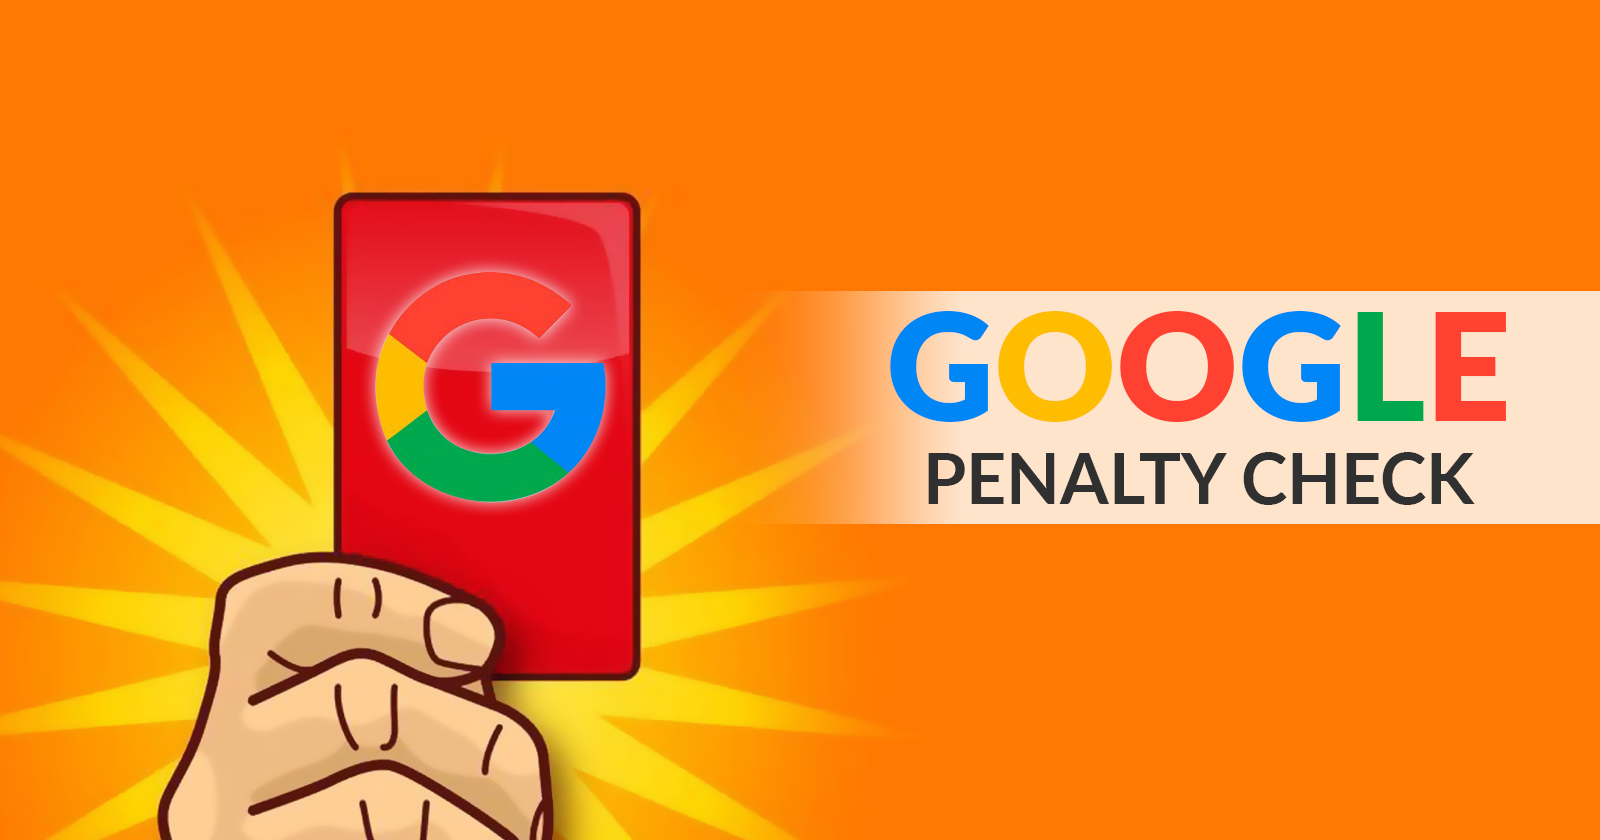 Google Penalty Check